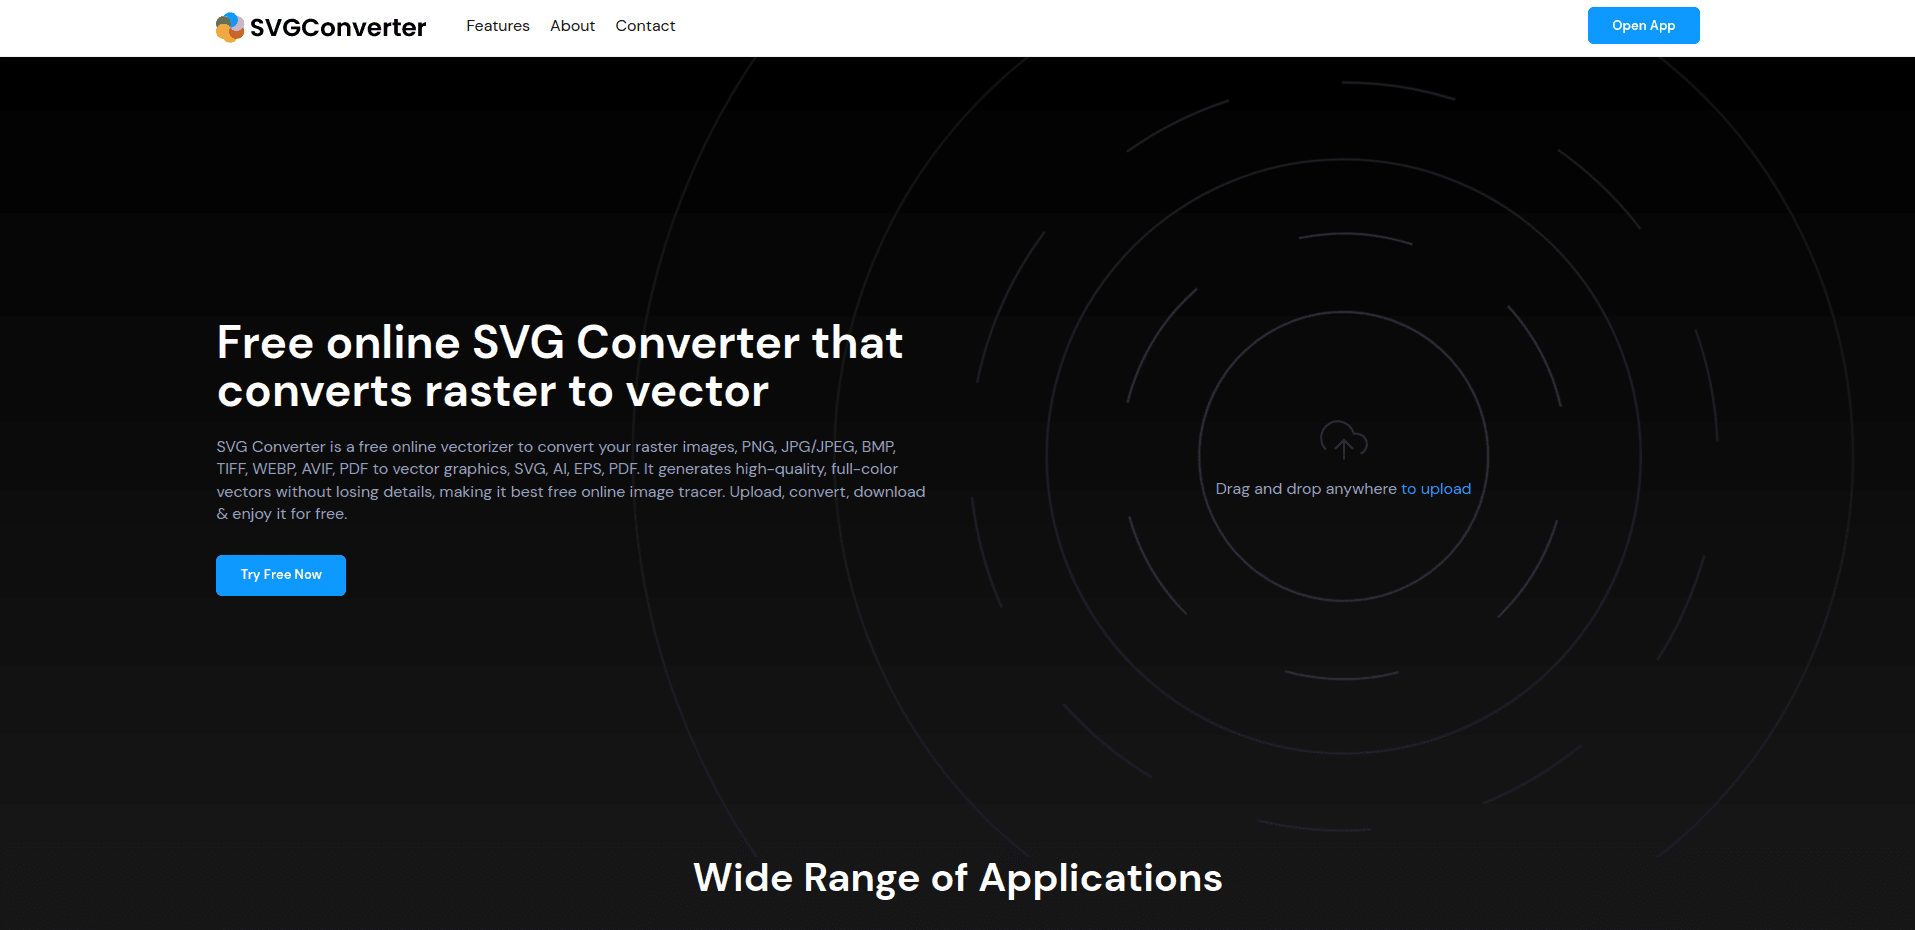 SVGConverter - User-Friendly Free Online App for Raster to Vector Conversion